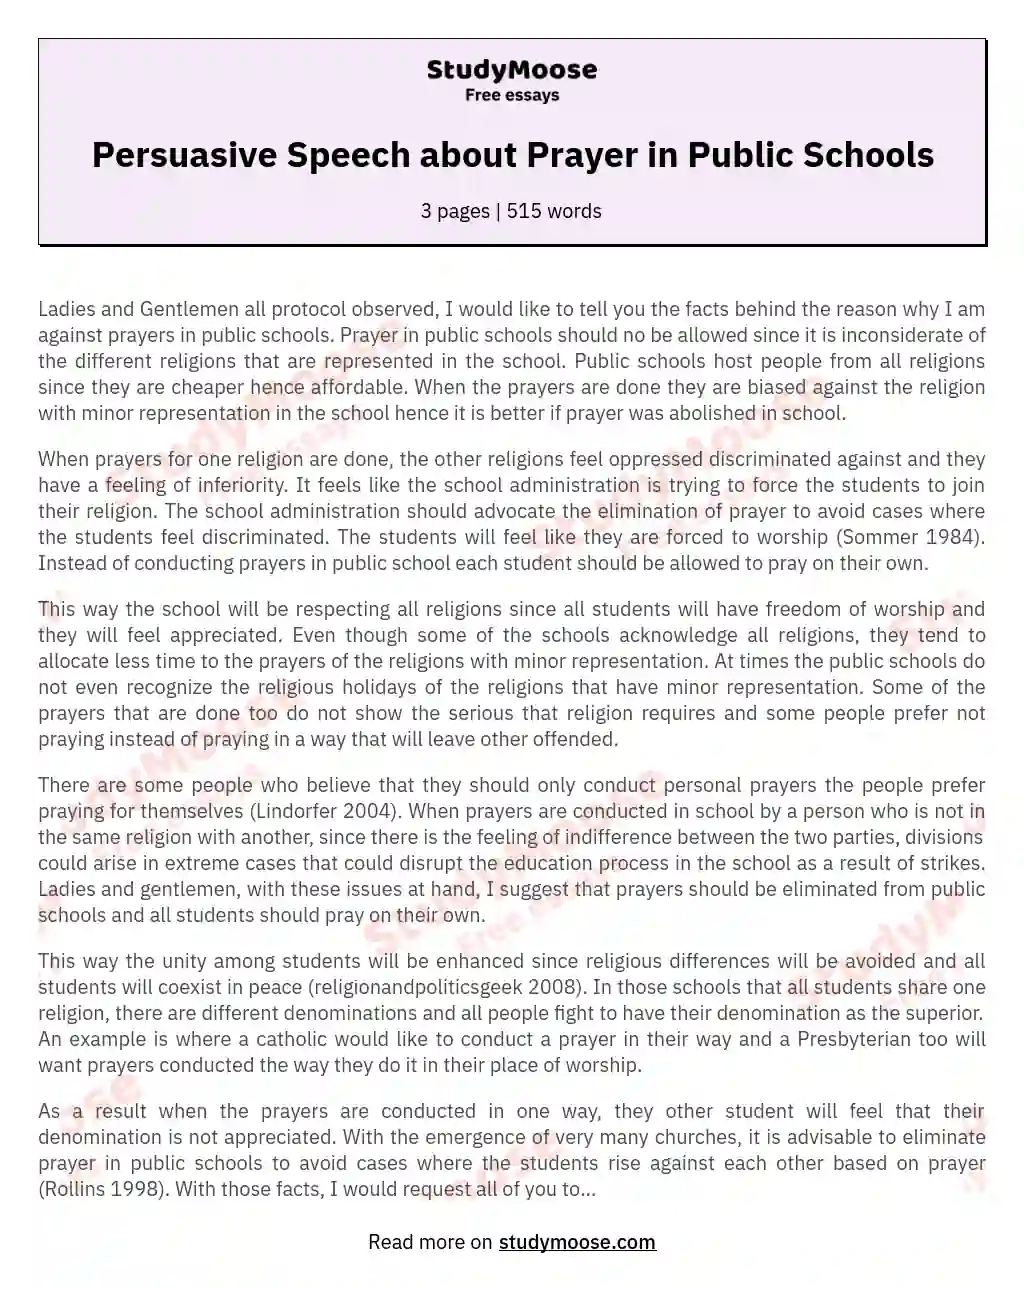 Persuasive Speech about Prayer in Public Schools essay